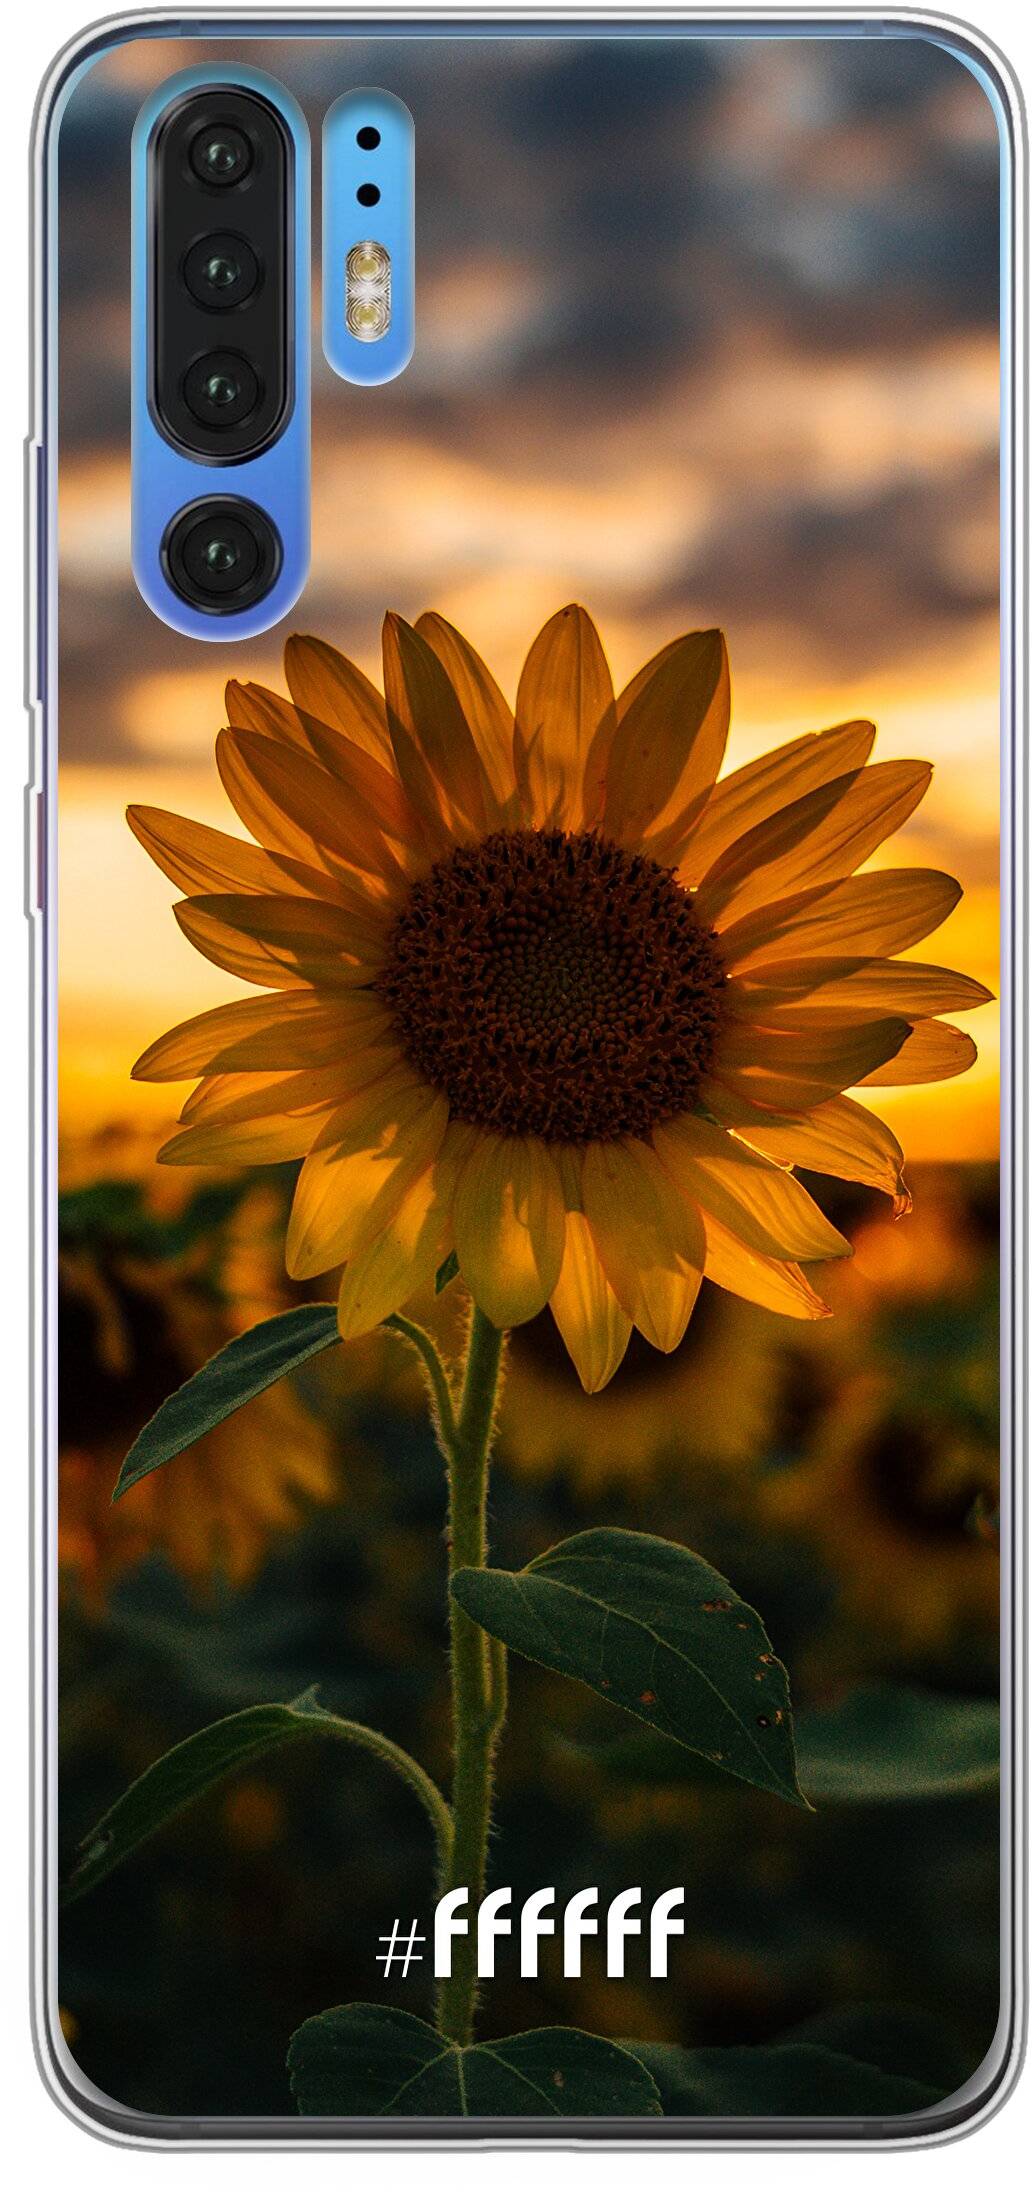 Sunset Sunflower P30 Pro